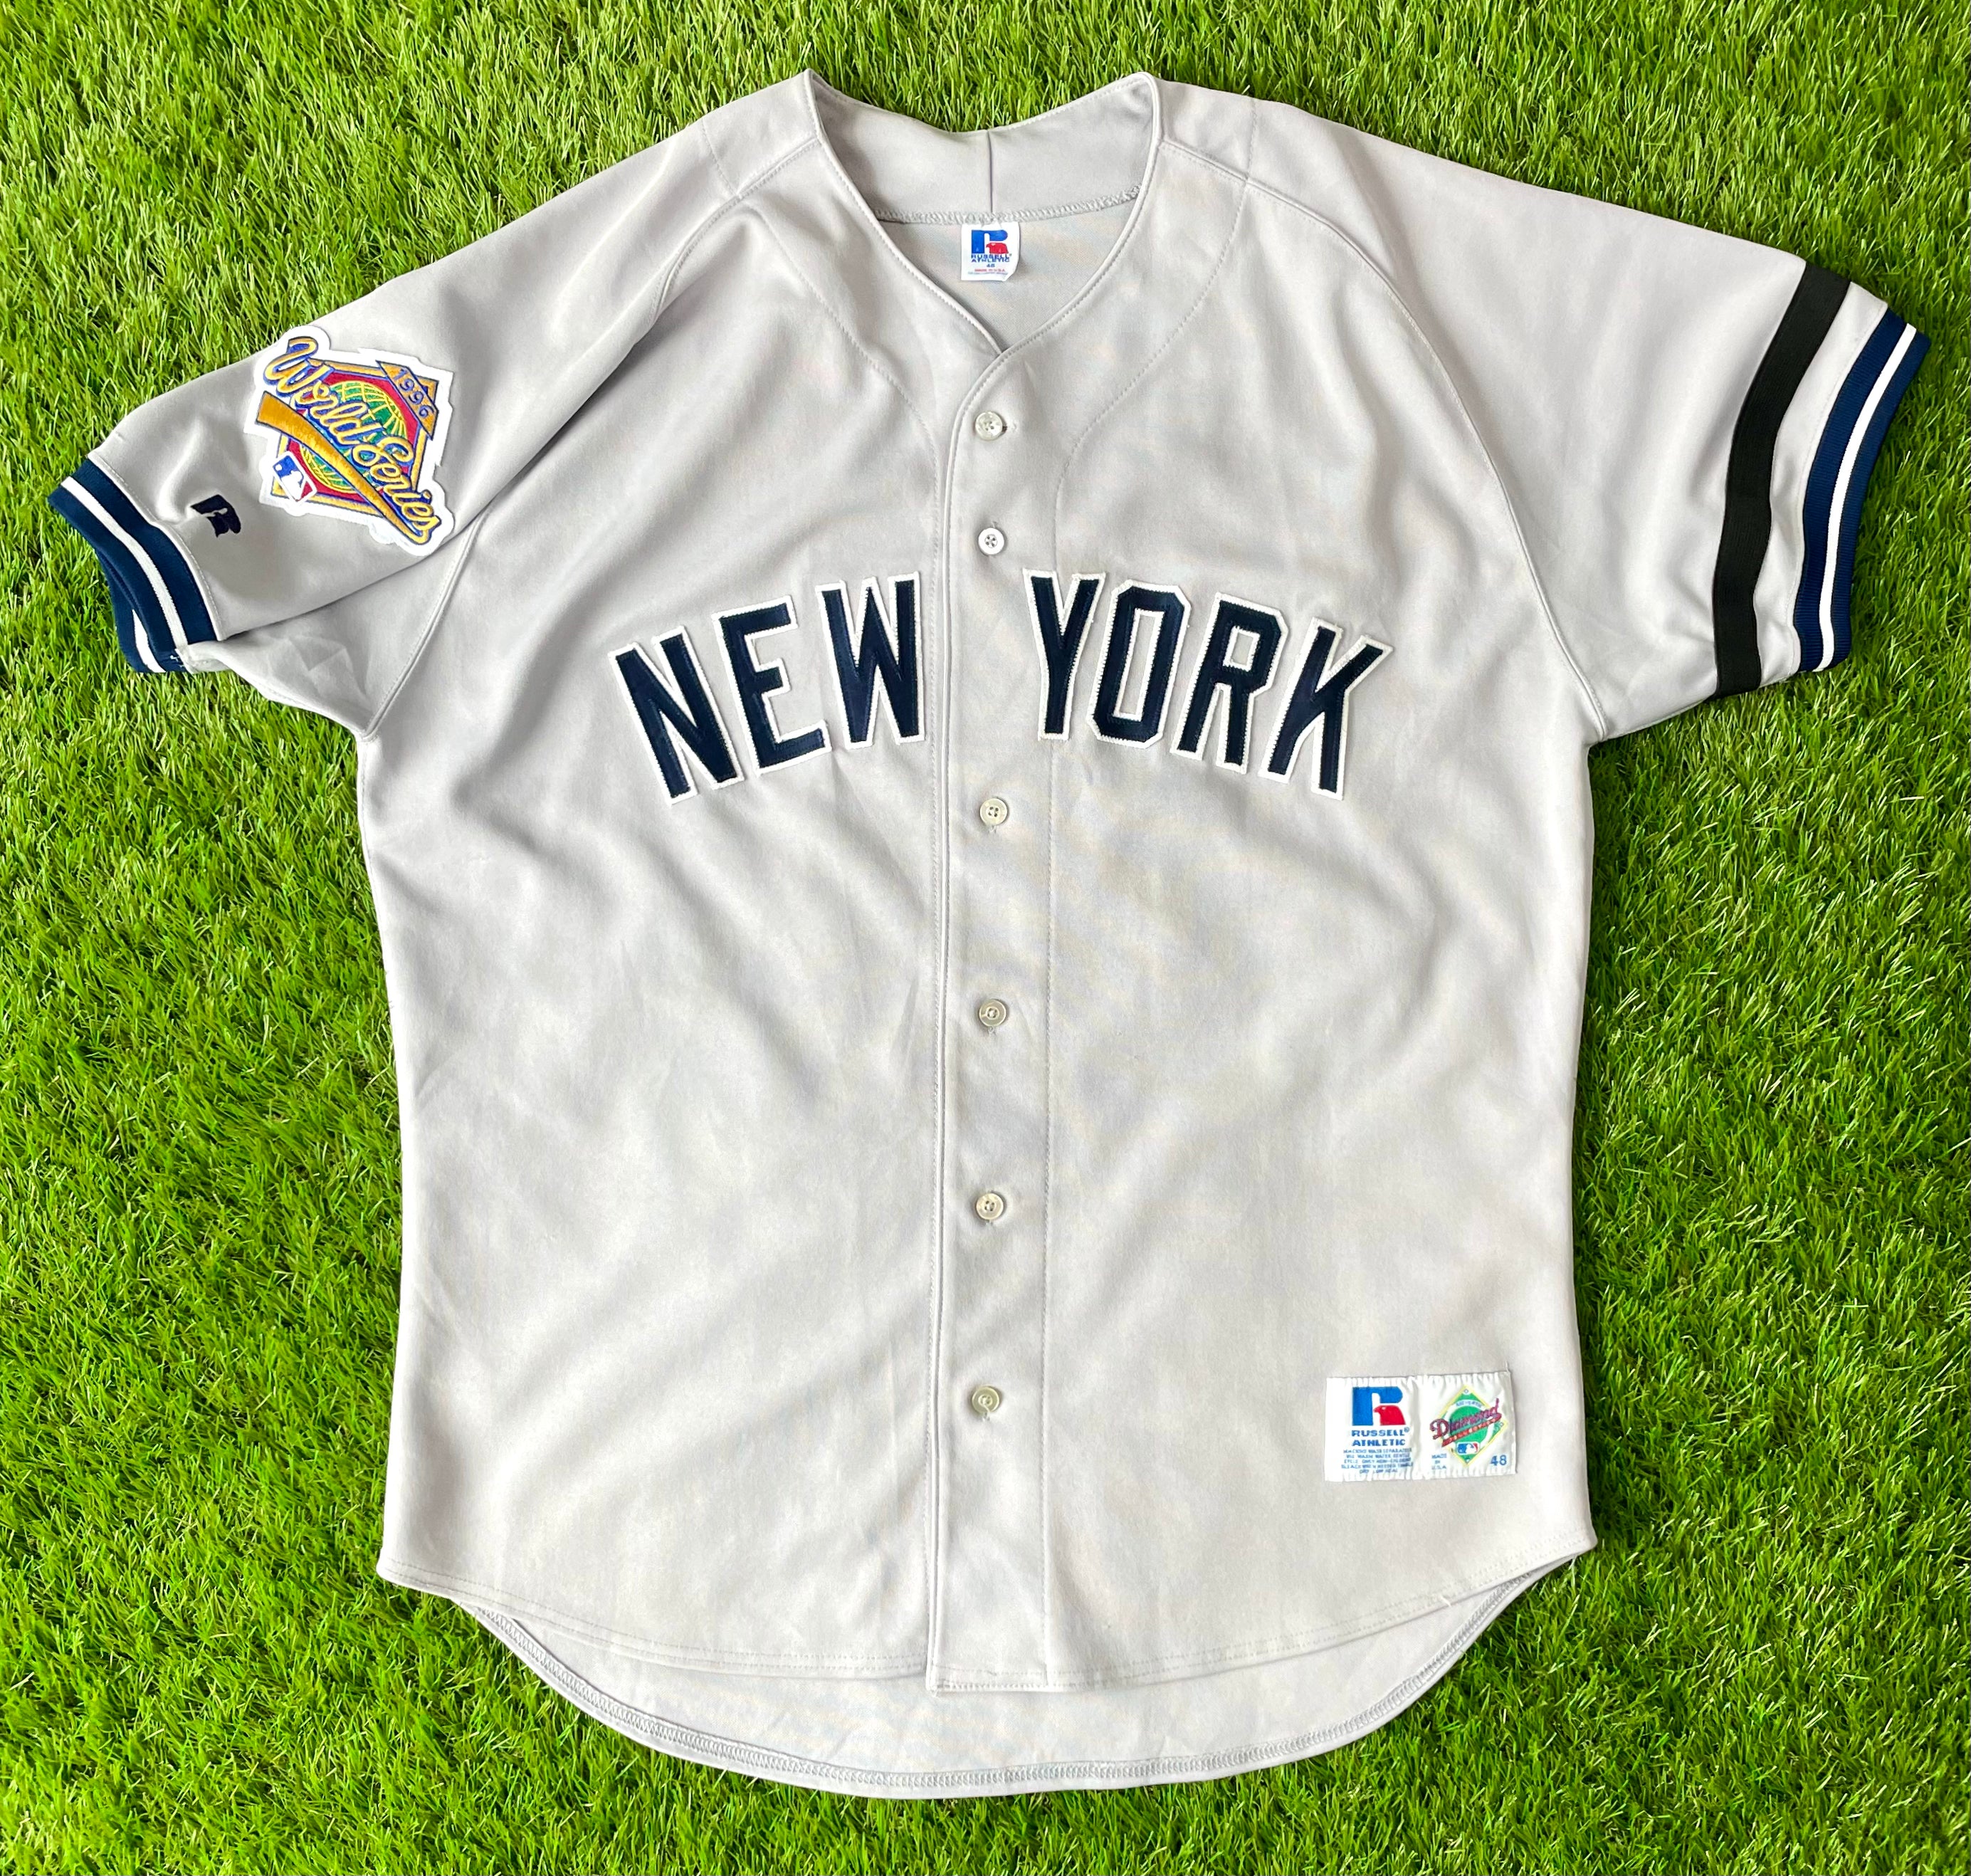 New York Yankees fashion Jersey XL